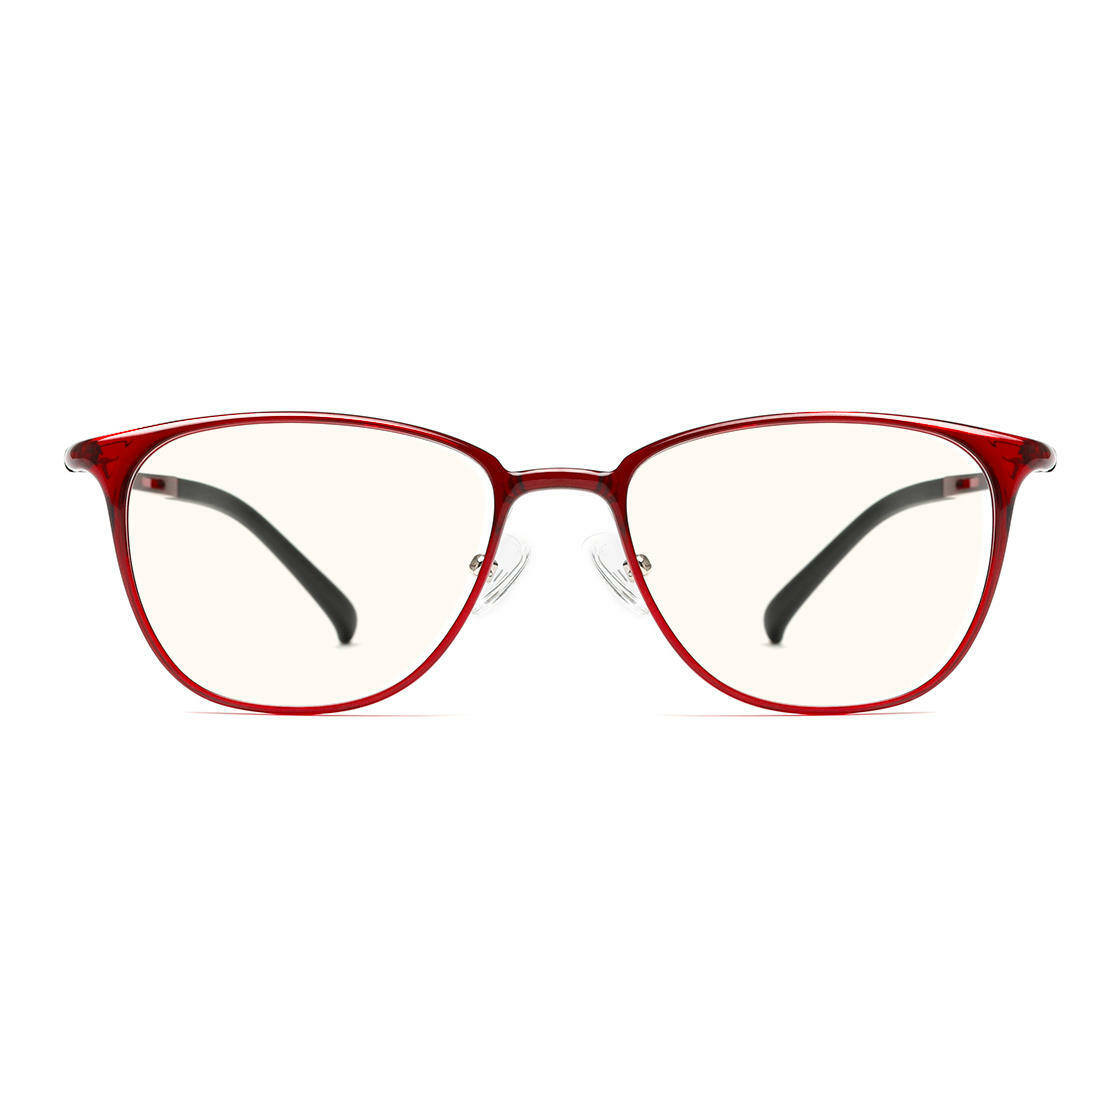 Xiaomi Mijia TS Computer Glasses / Red